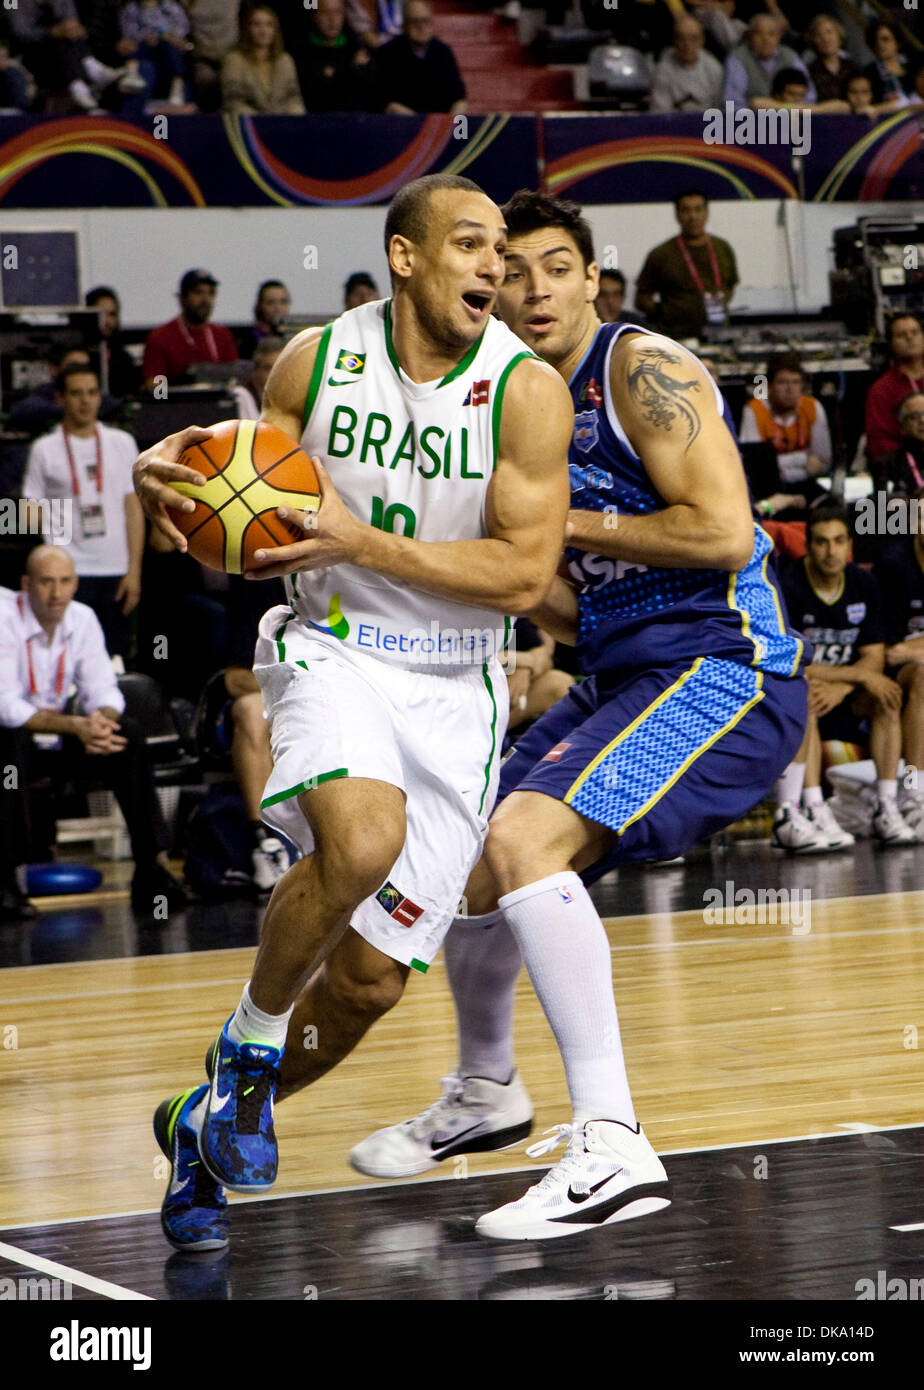 7 septembre 2011 - Mar del Plata, Buenos Aires, Argentine - Brésil's ALEX  RIBEIRO GARCIA va passé Milwaukee Bucks et l'Argentine CARLOS DELFINO au  cours de la FIBA Americas 2011 match de